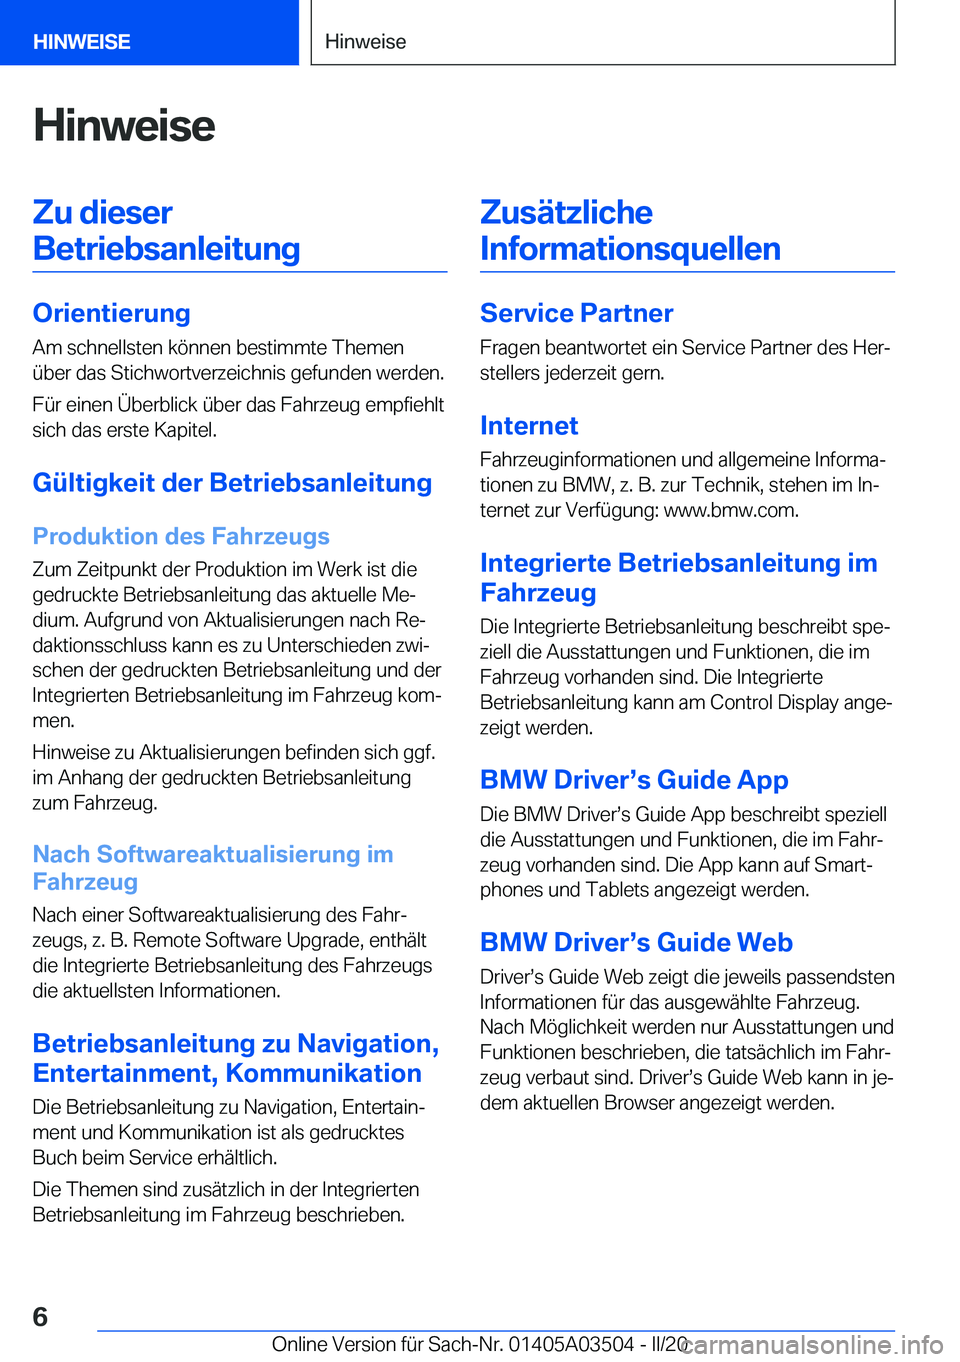 BMW X3 2020  Betriebsanleitungen (in German) �H�i�n�w�e�i�s�e�Z�u��d�i�e�s�e�r�B�e�t�r�i�e�b�s�a�n�l�e�i�t�u�n�g
�O�r�i�e�n�t�i�e�r�u�n�g �A�m��s�c�h�n�e�l�l�s�t�e�n��k�